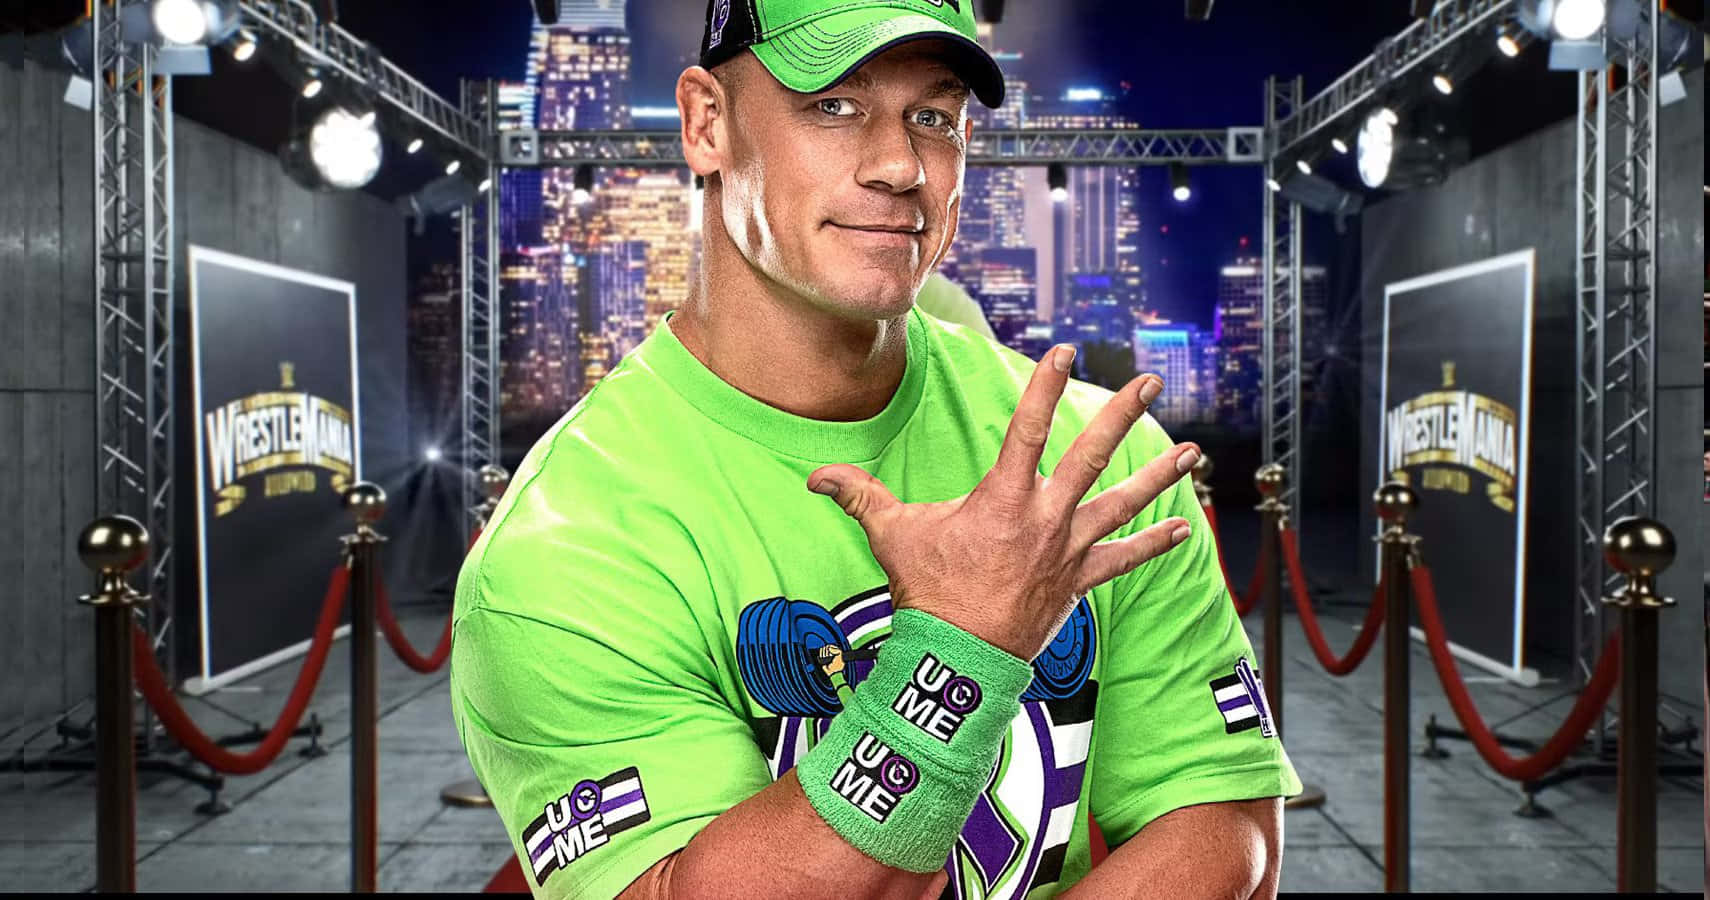 John Cena - Wrestler, Actor, and Inspirational Personality